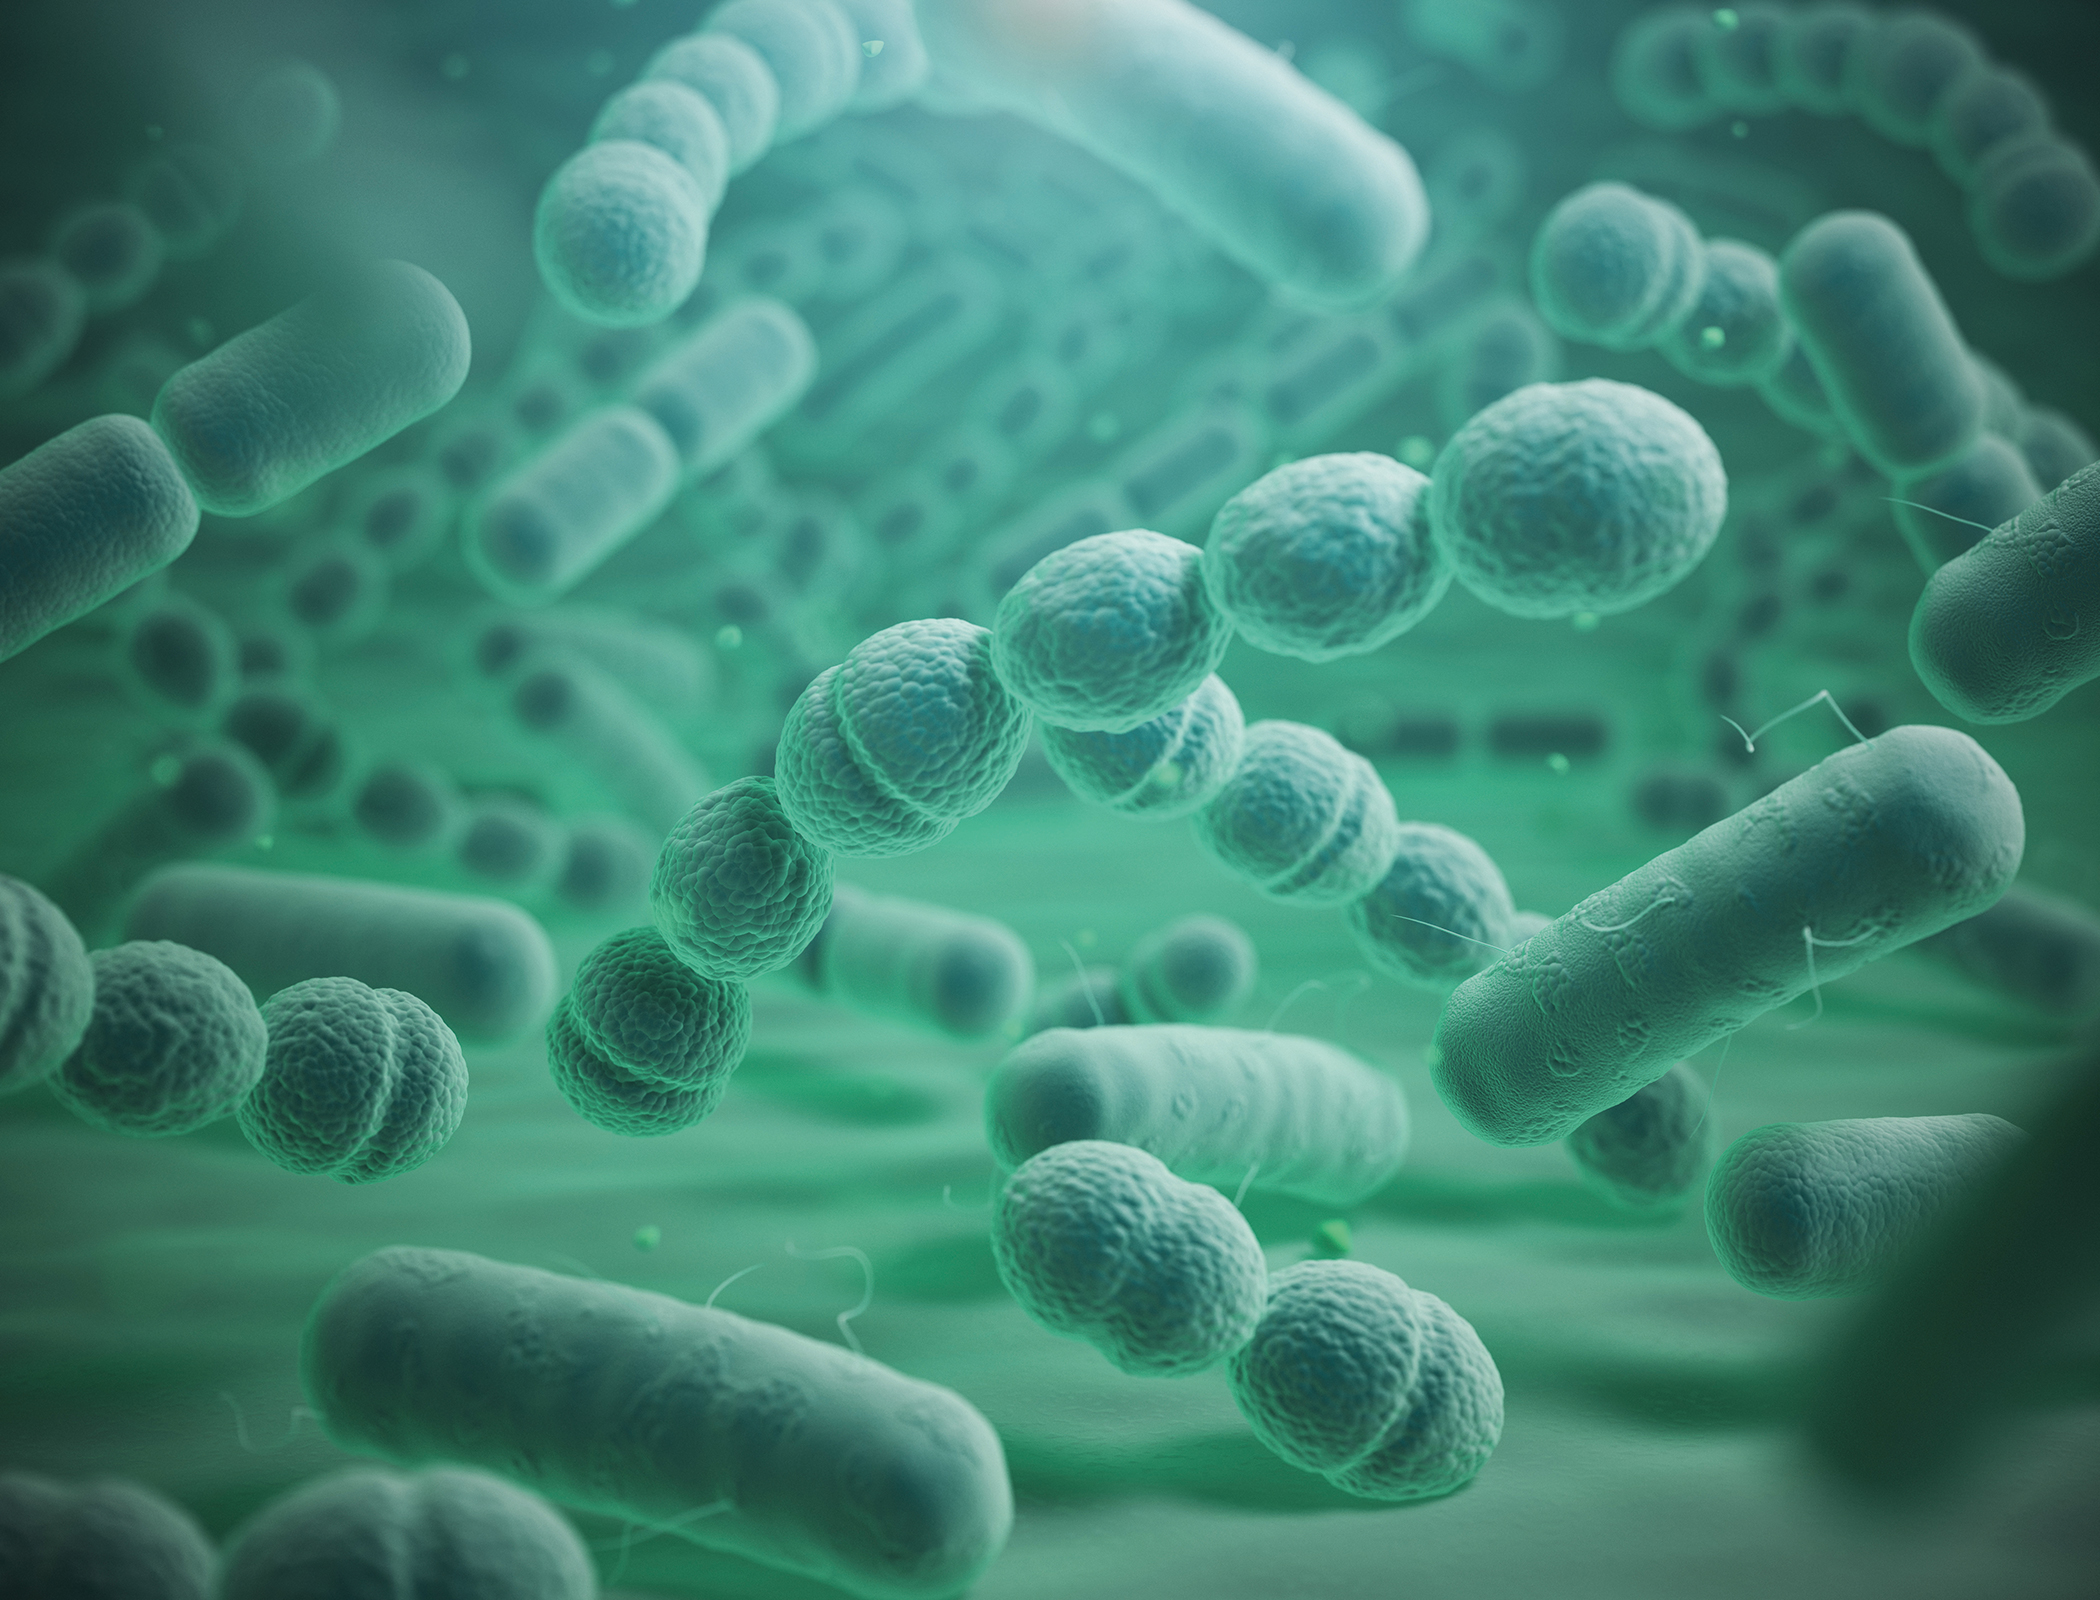 Breaking the link between industrial pollution and antibiotic resistance